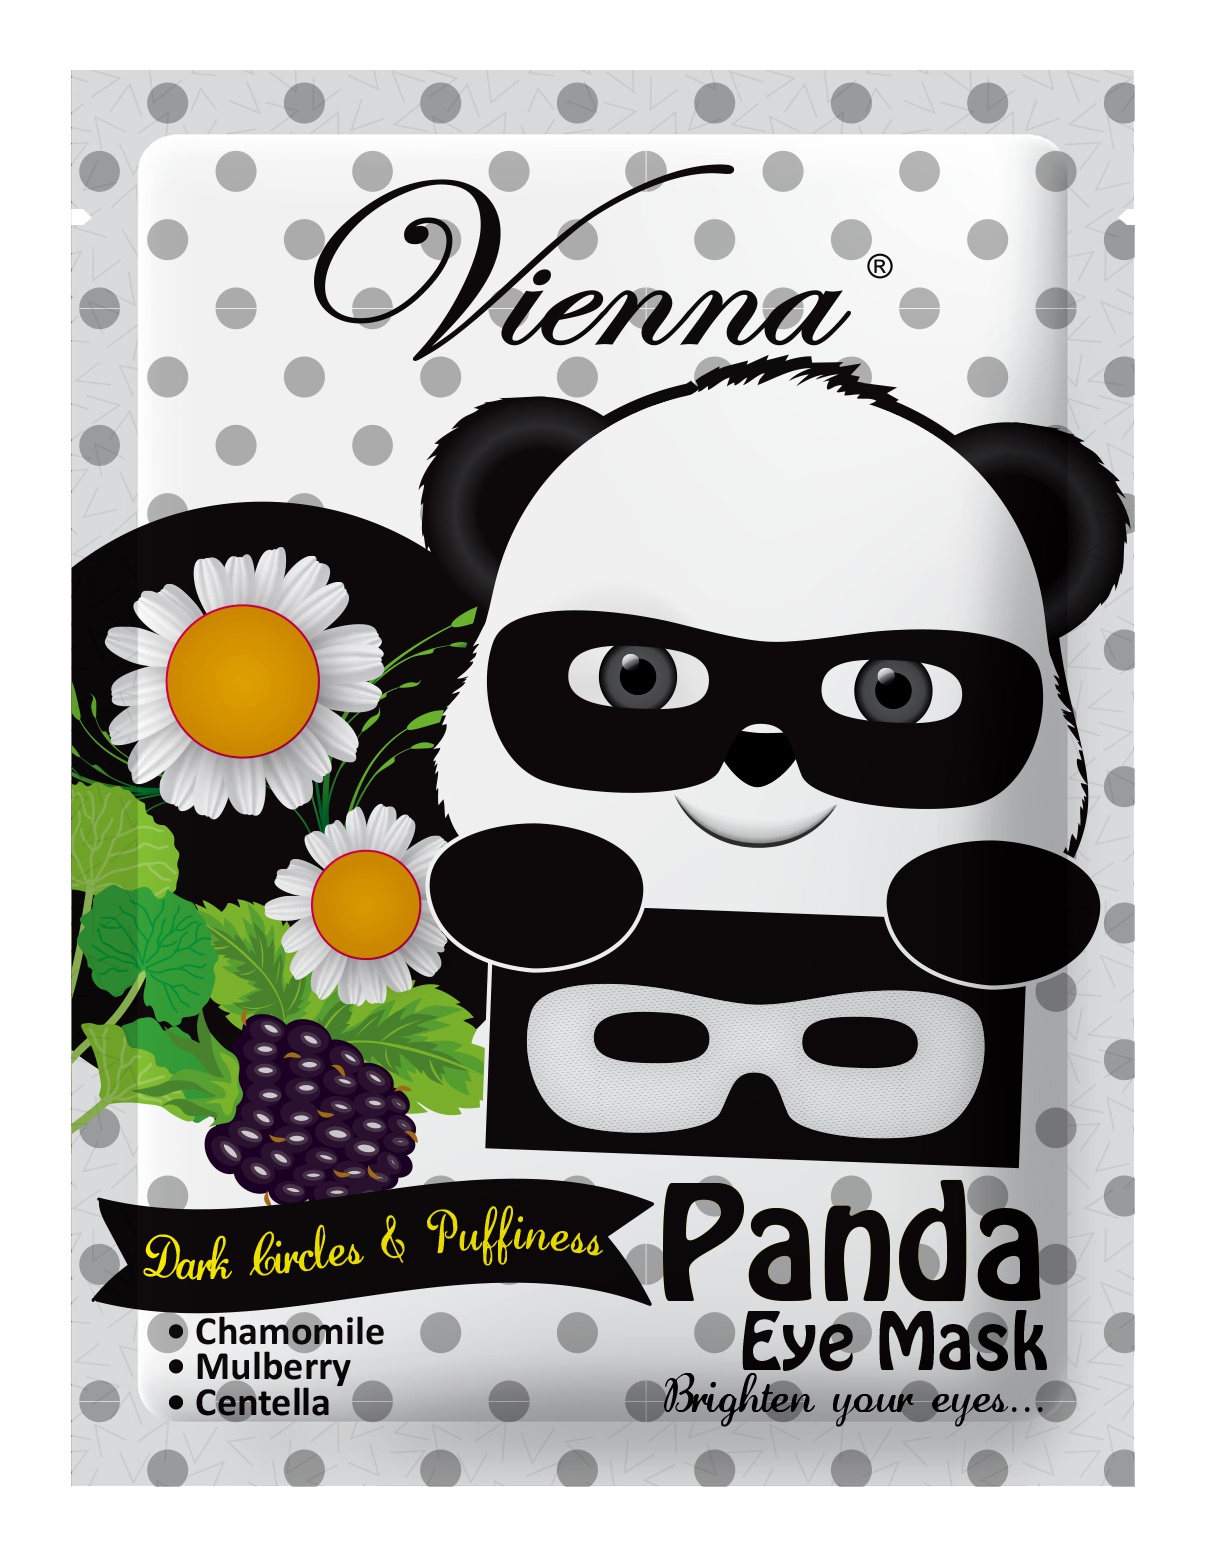 Vienna Panda Eye Mask Dark Circles & Puffiness